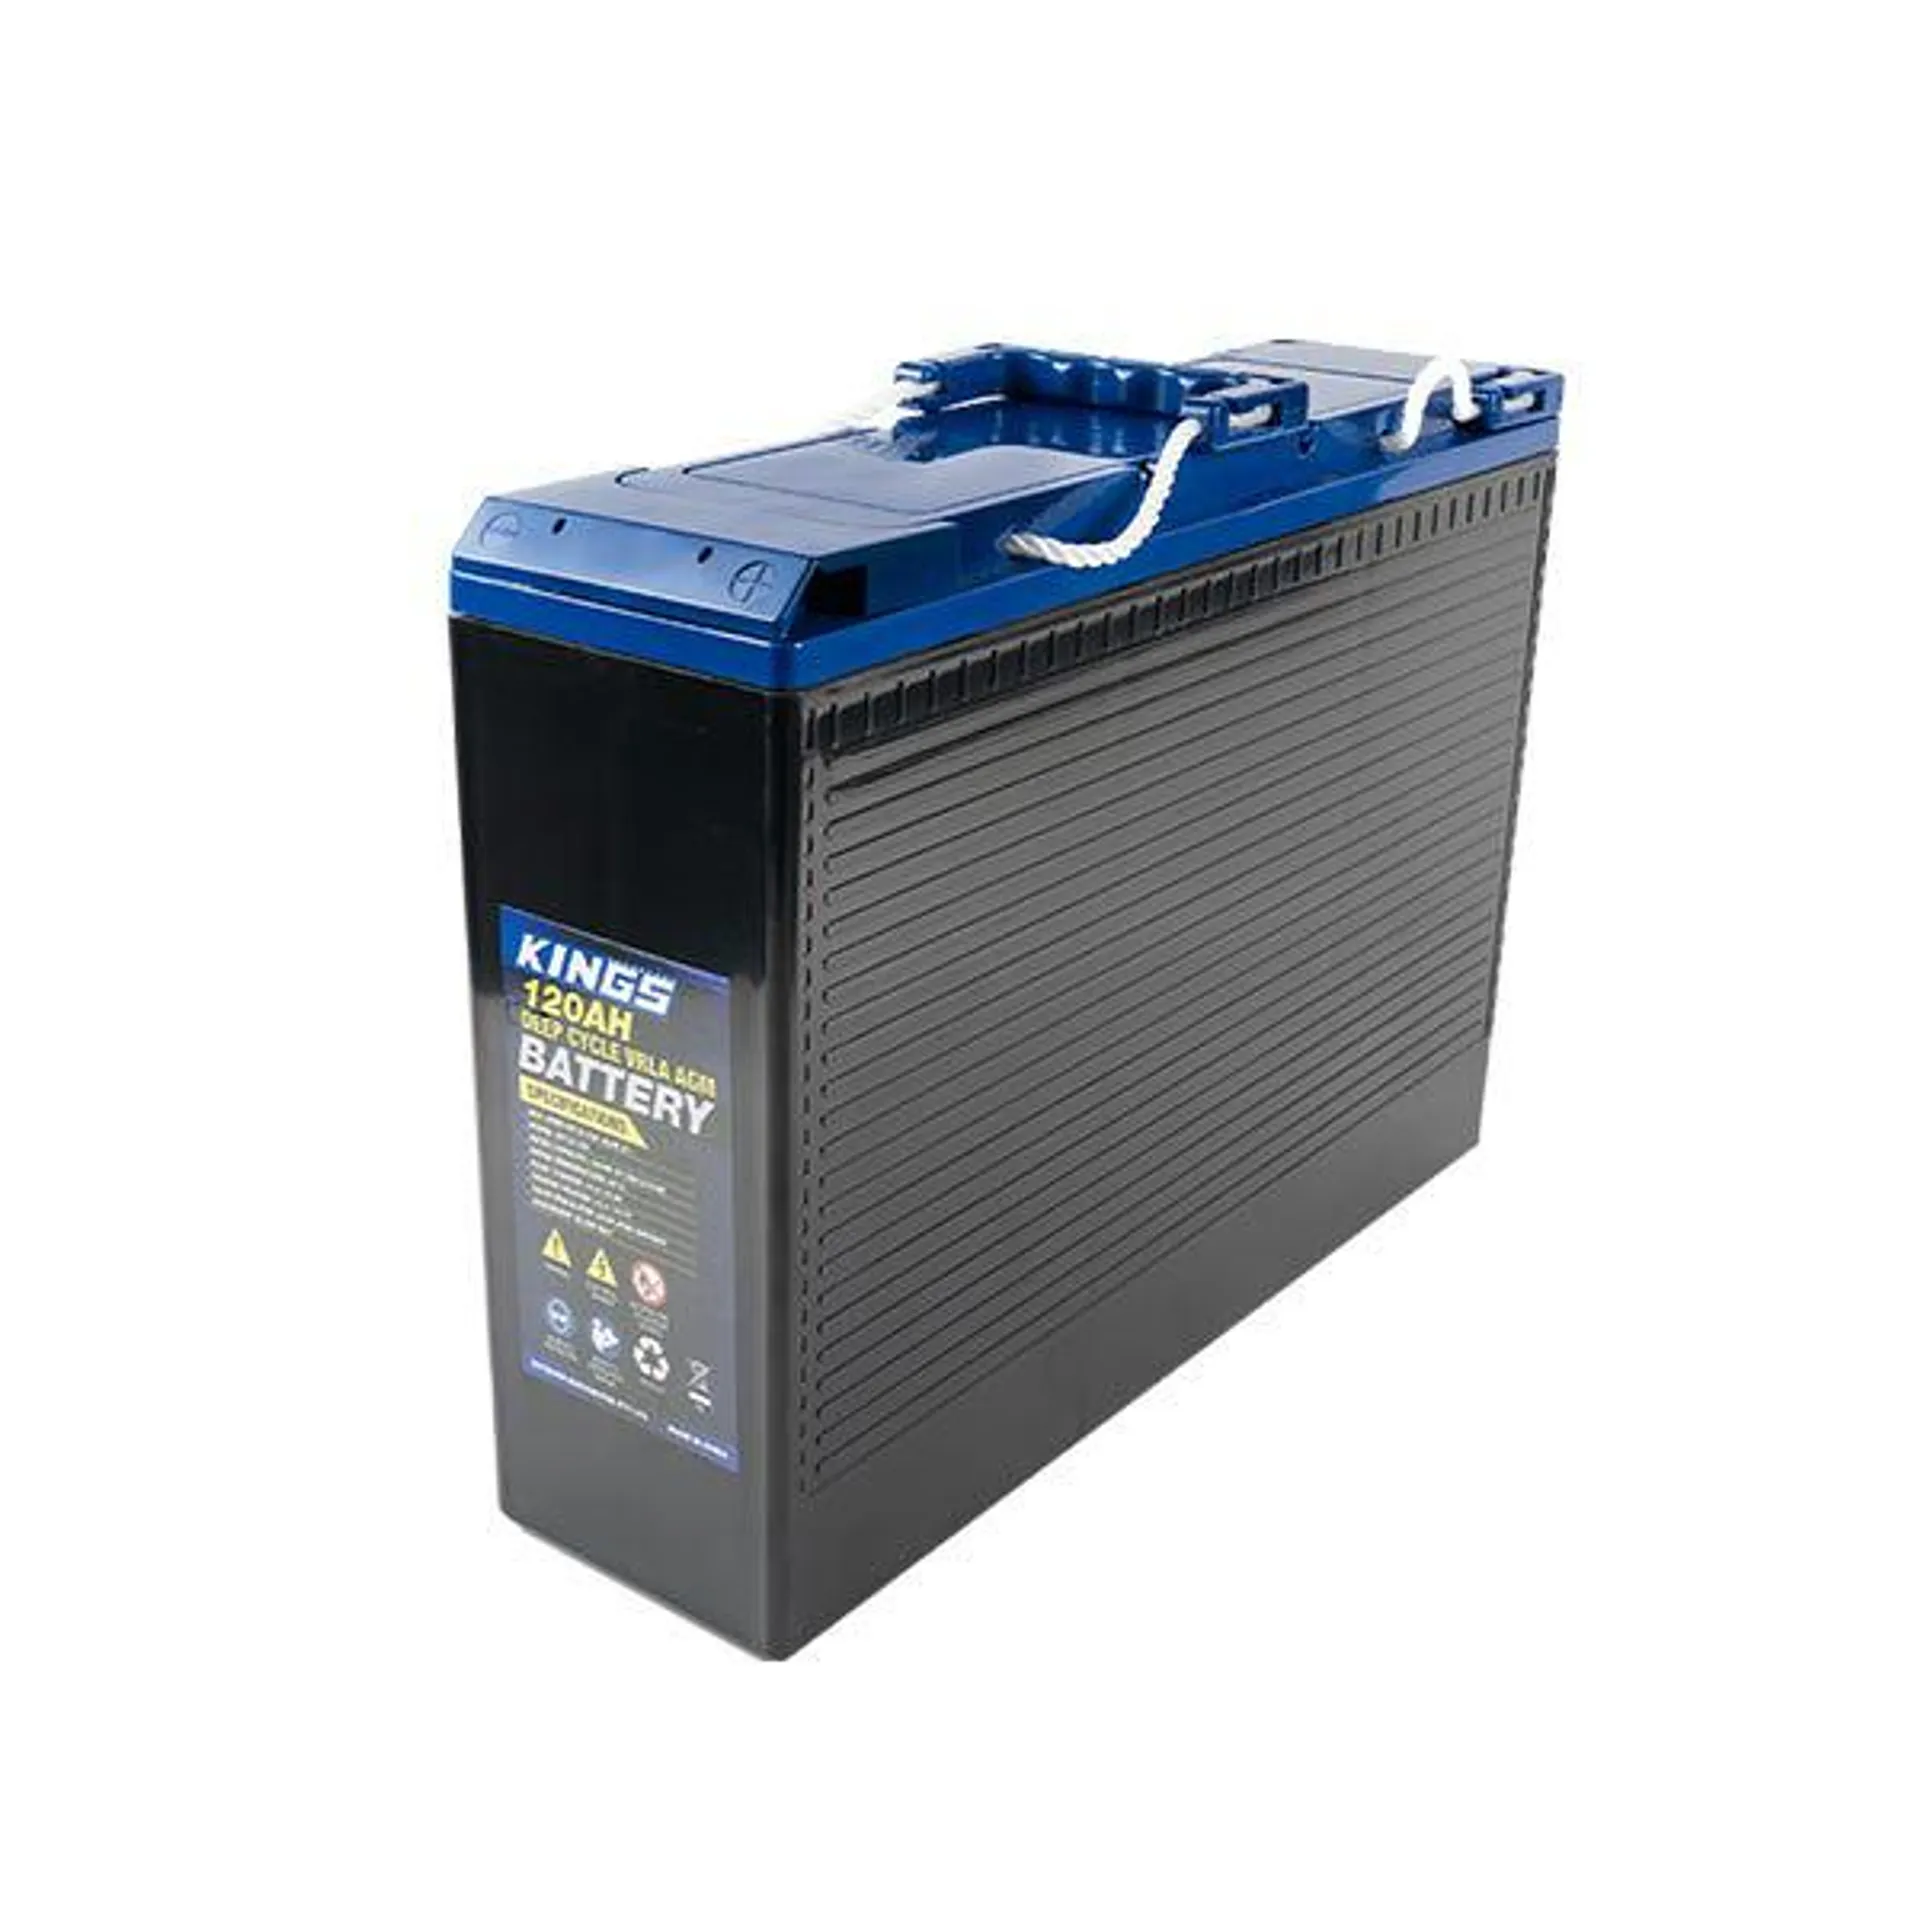 Kings 120Ah 12v Slimline AGM Deep Cycle Battery | 5x Faster Recharging | Maintenance-Free | 12-Month Warranty